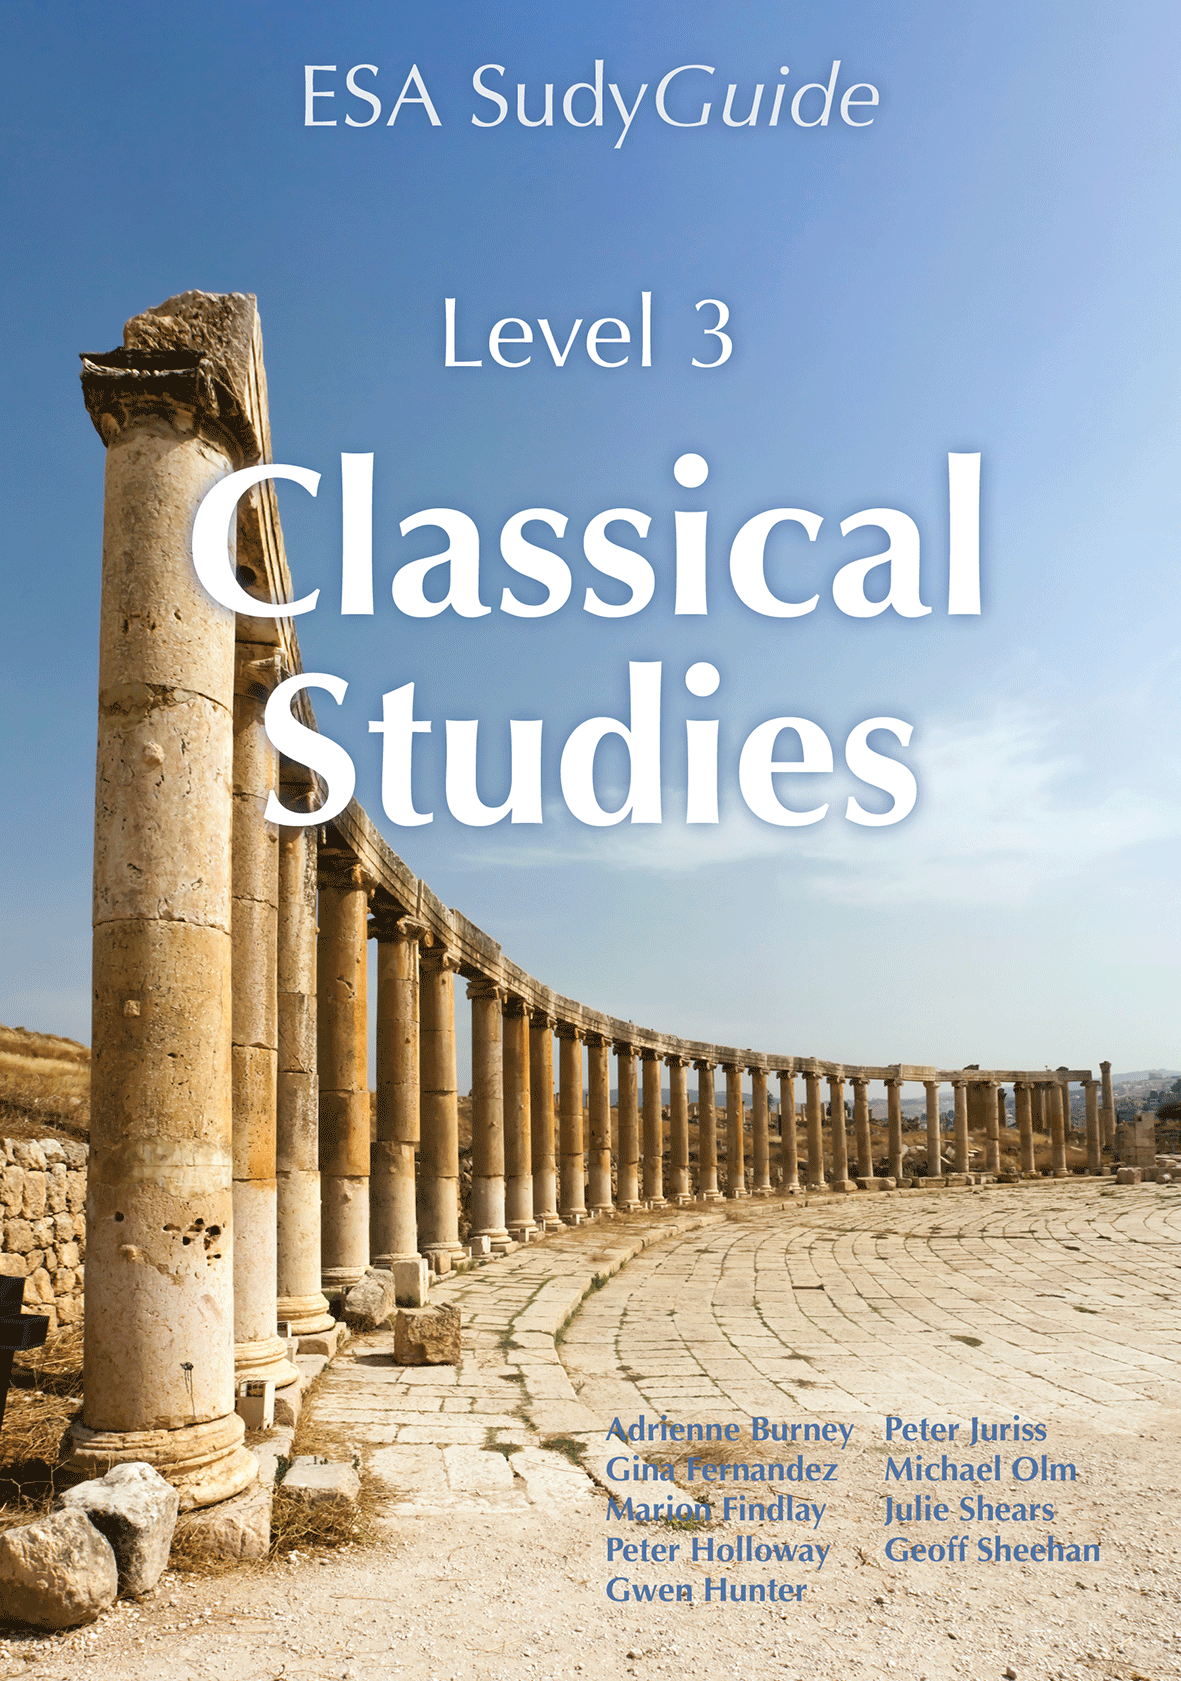 Level 3 Classical Studies ESA Study Guide